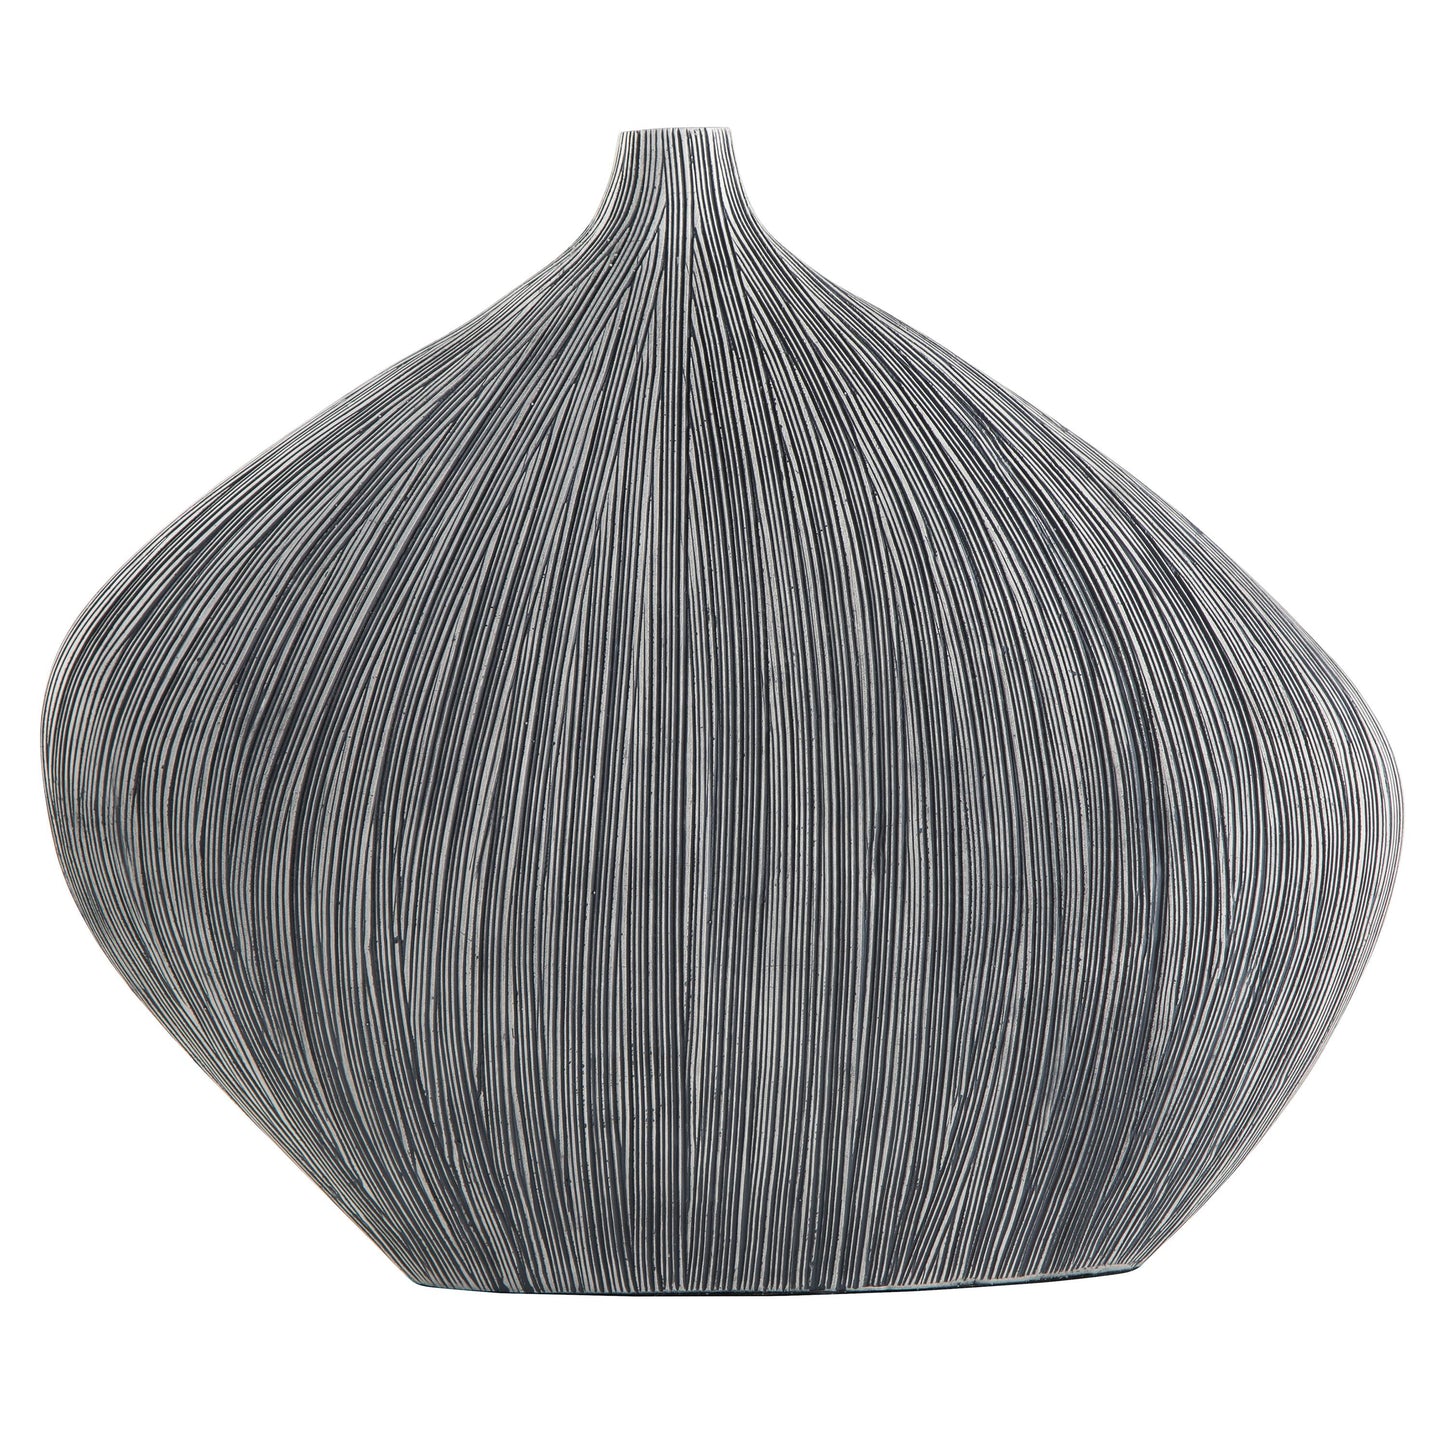 Signature Design by Ashley Home Decor Vases & Bowls A2000547 IMAGE 1